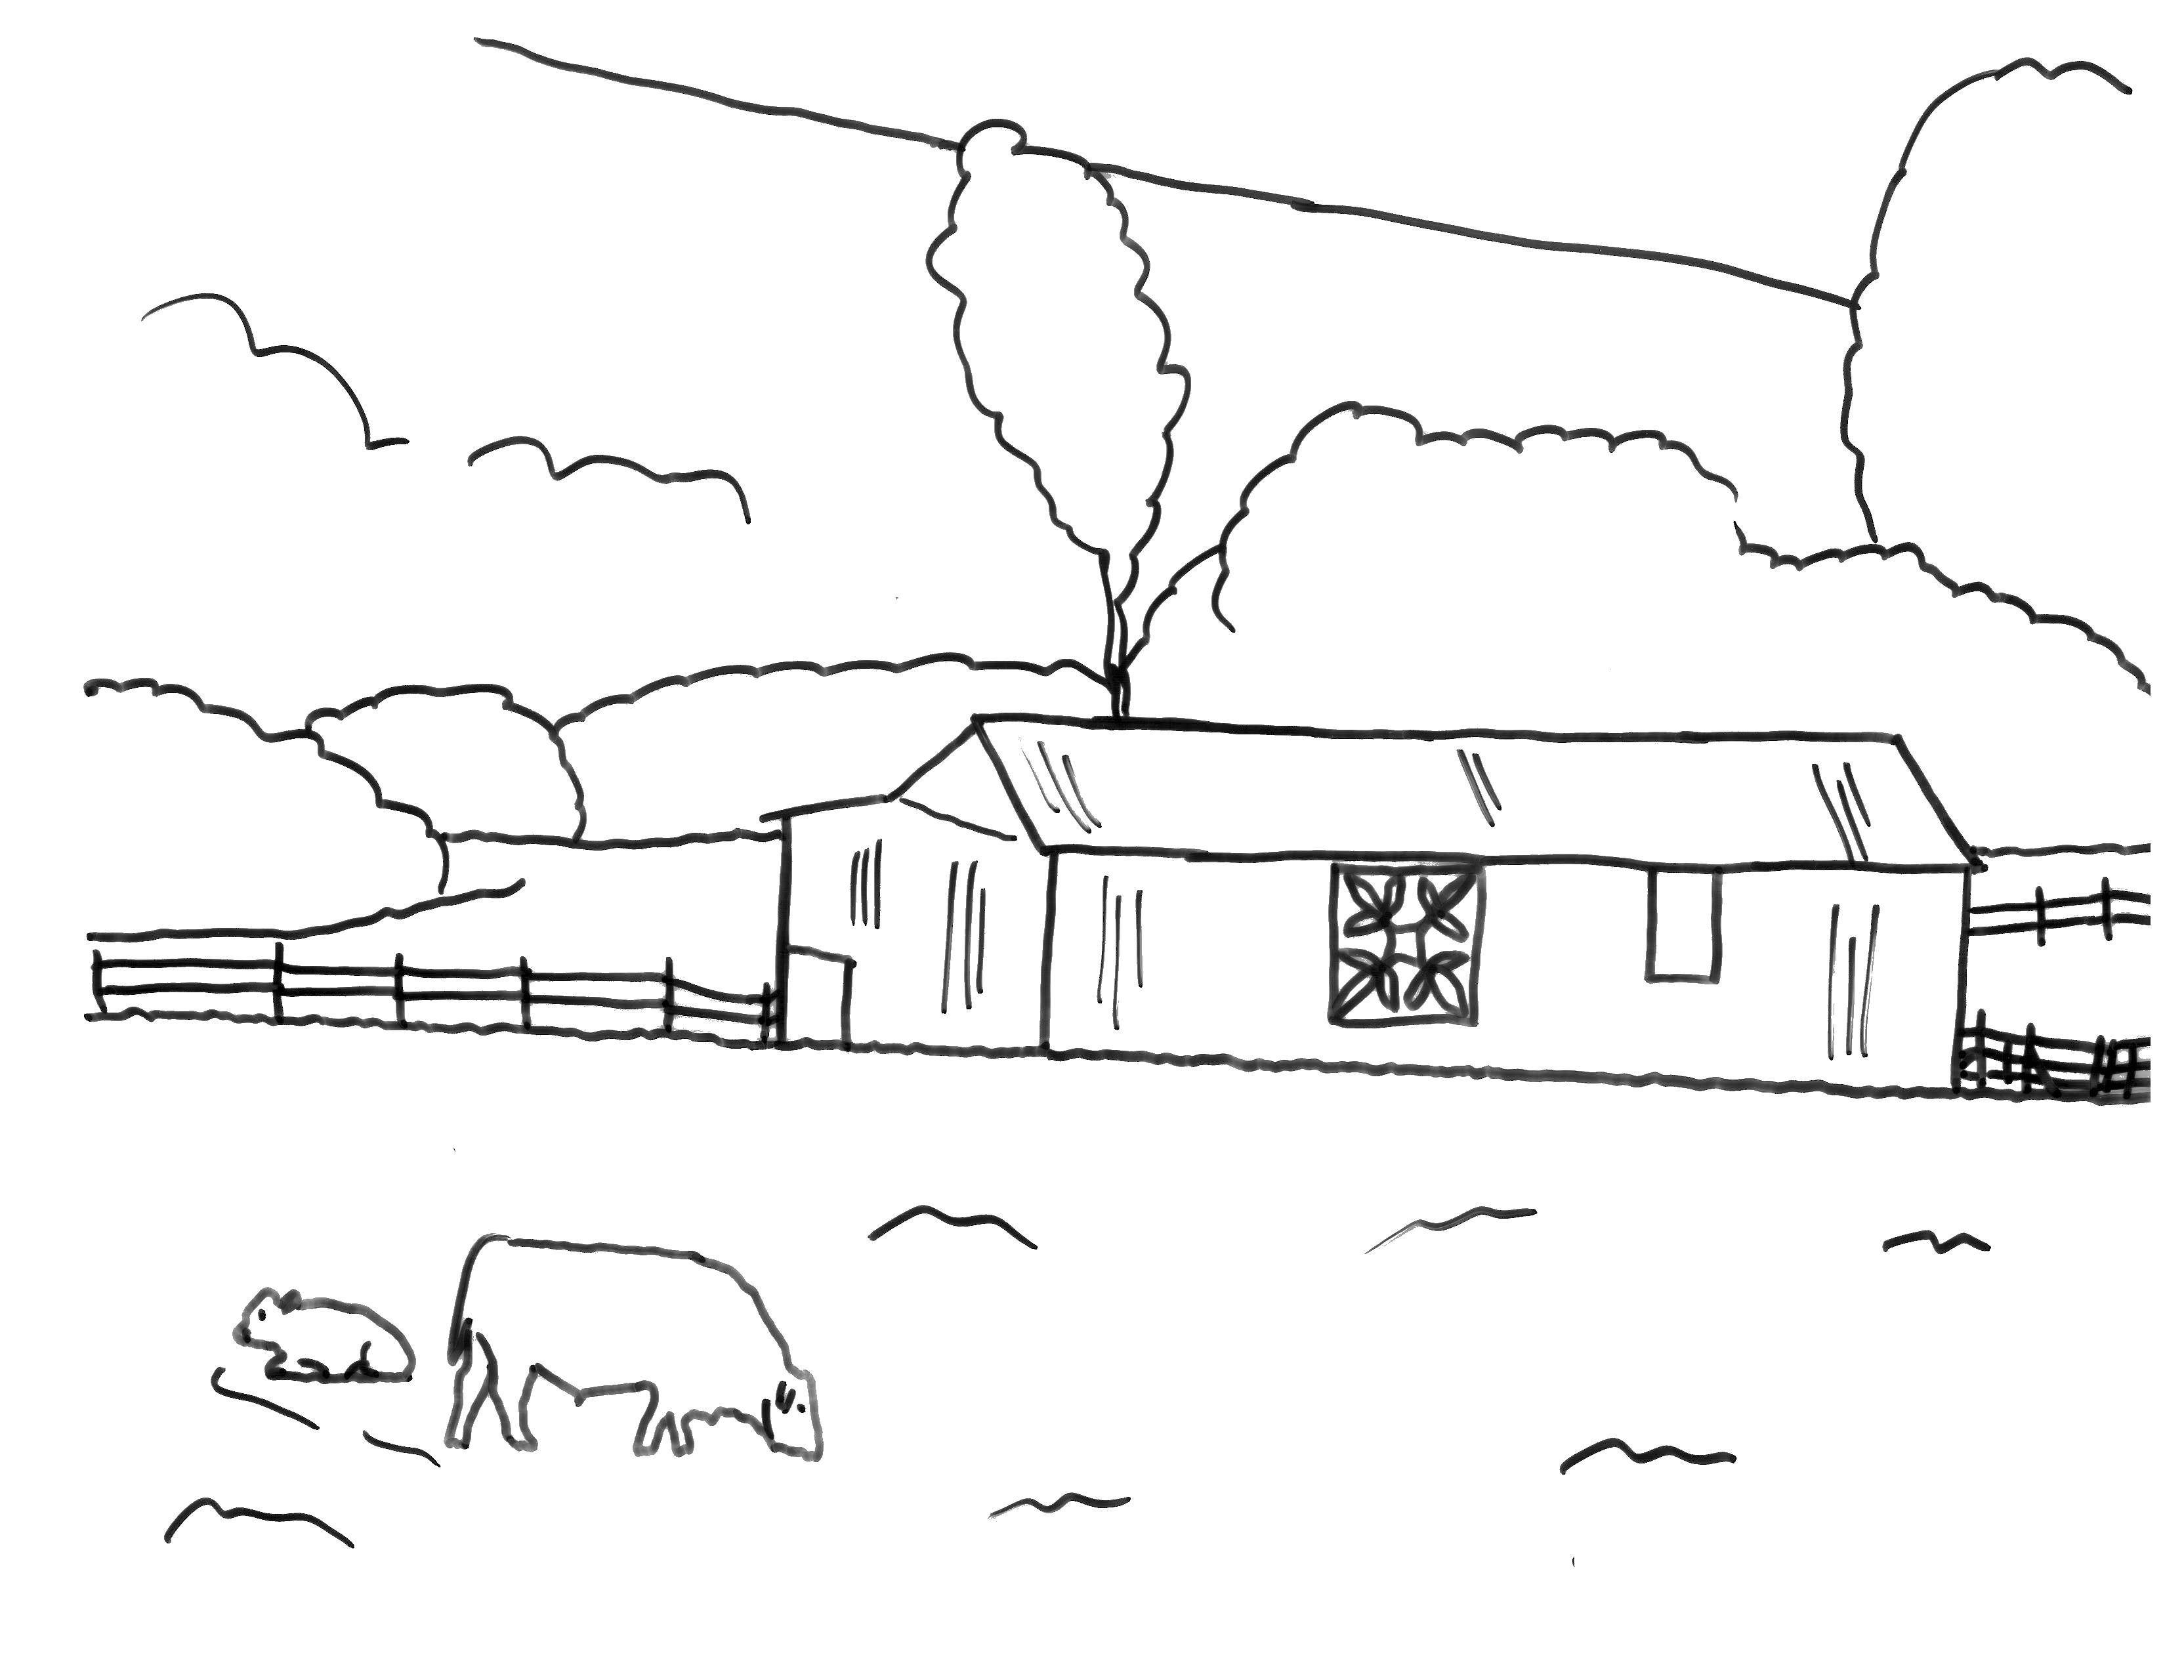 Coloring Farm and sheep. Category farm. Tags:  farm, lamb, meadow.